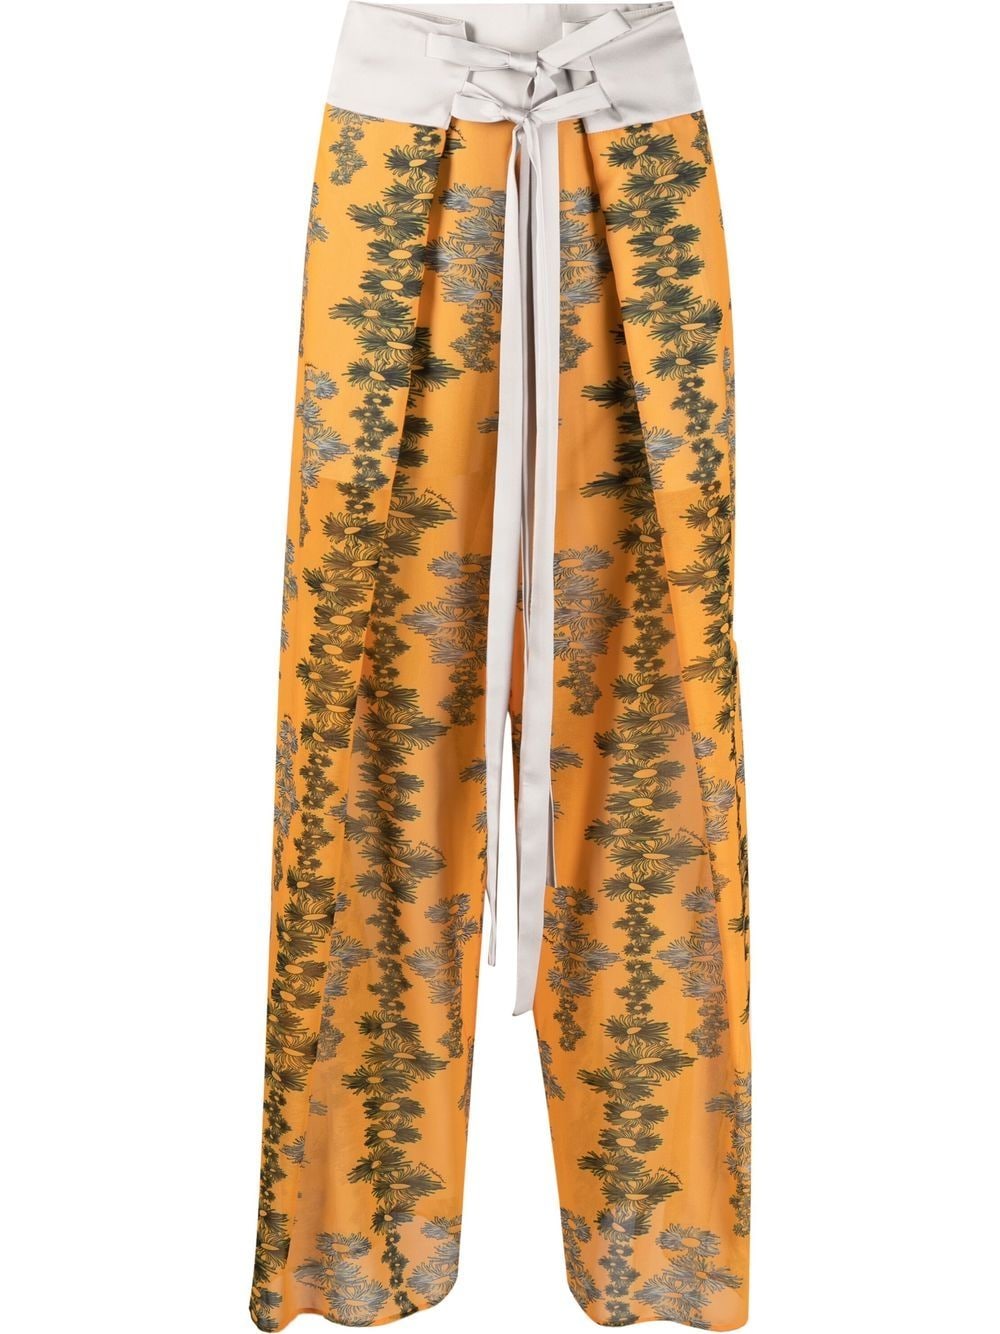 Kiko Kostadinov floral-print tie-waist palazzo trousers